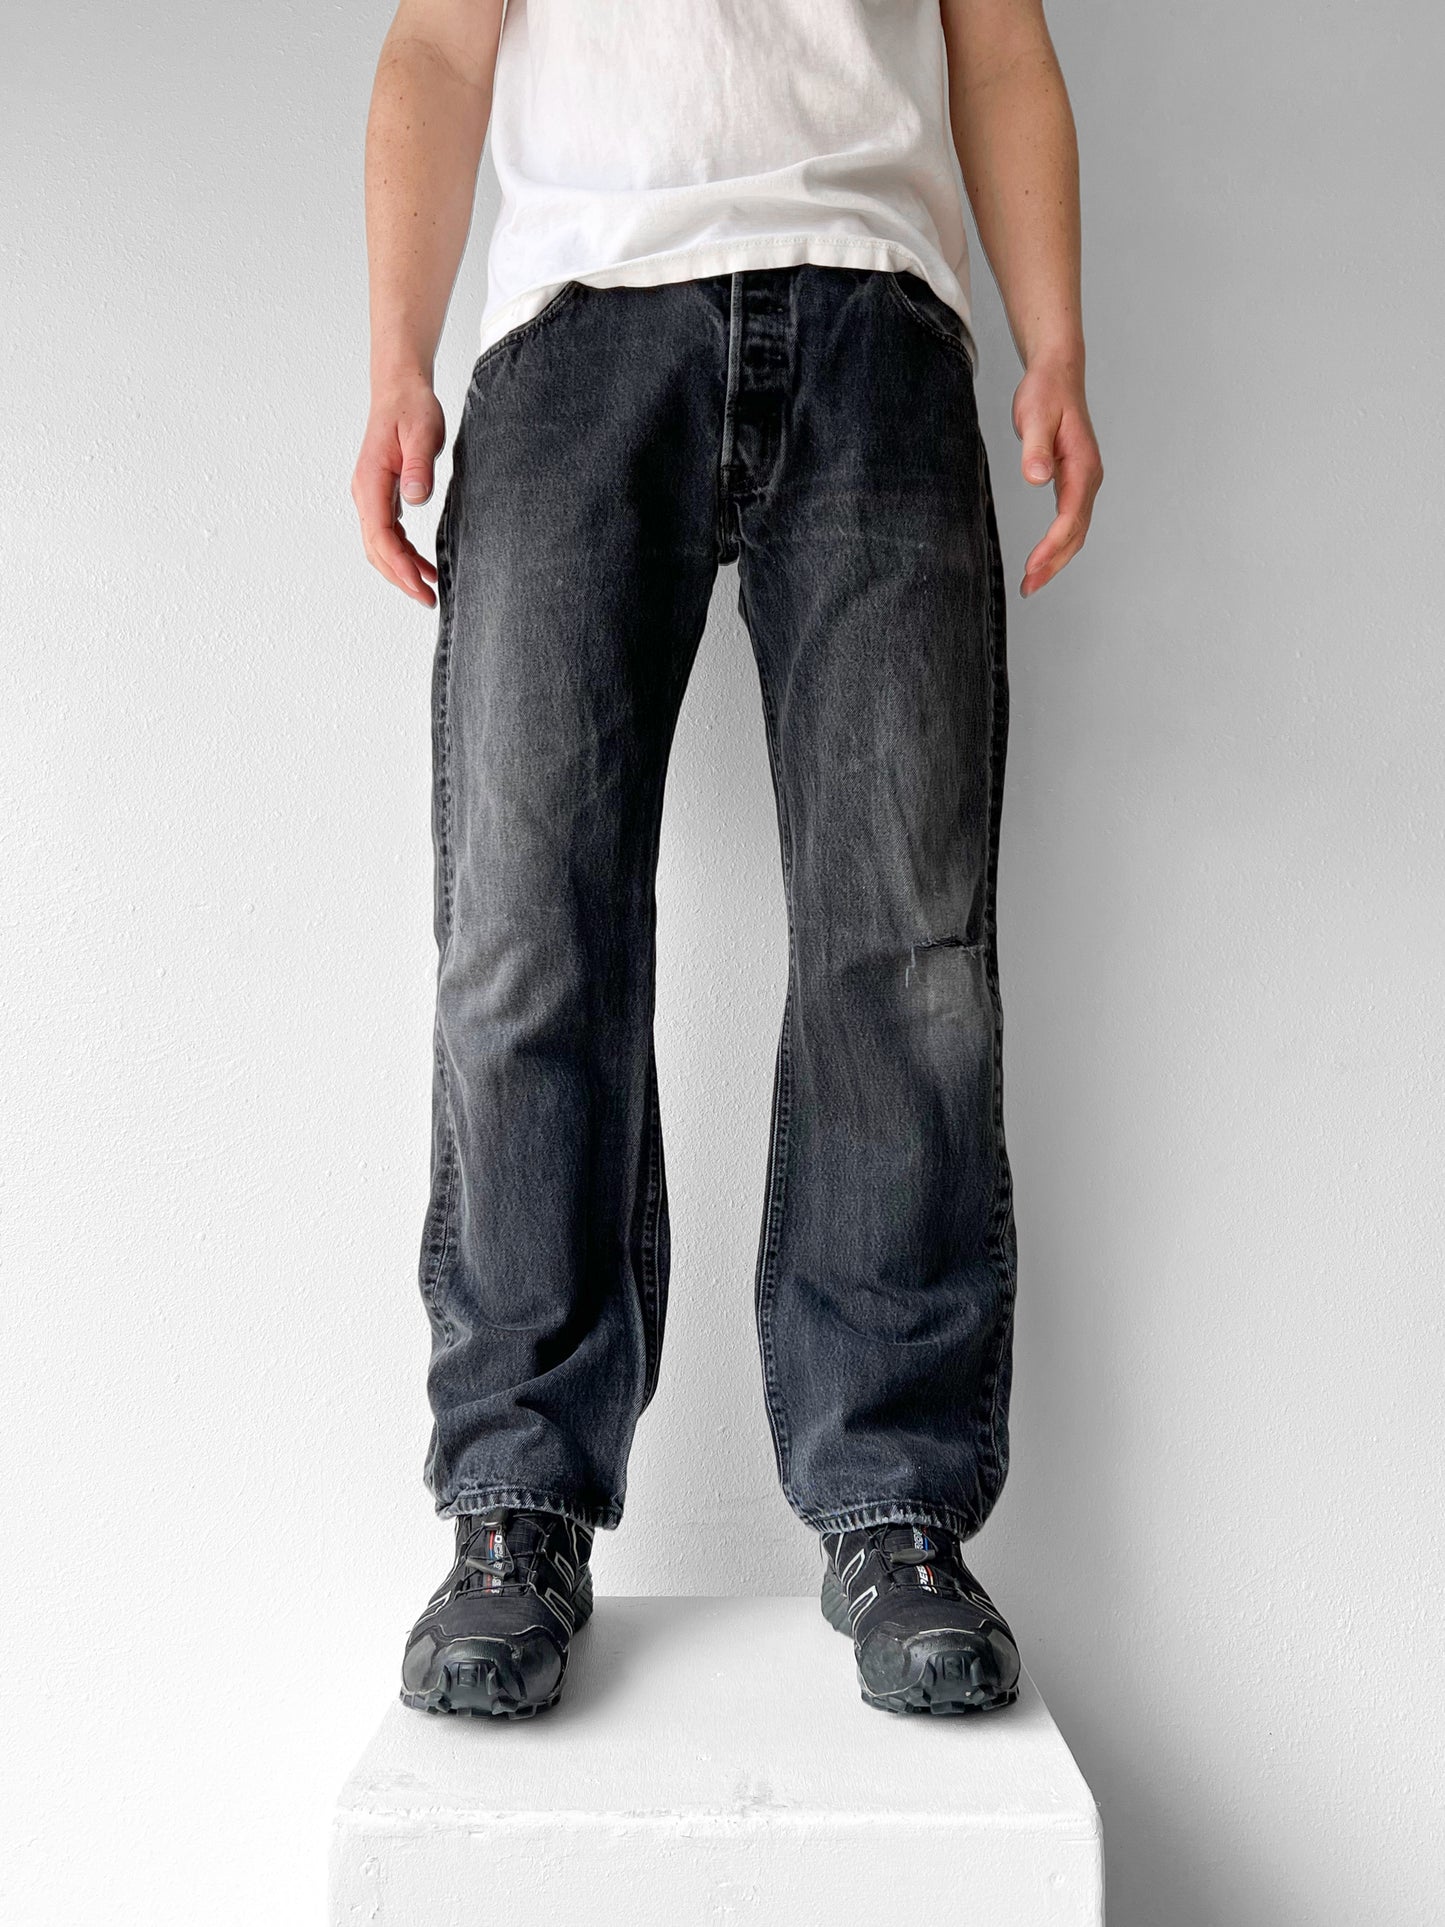 Levi's Faded Black 501 Jeans - 36 x 32